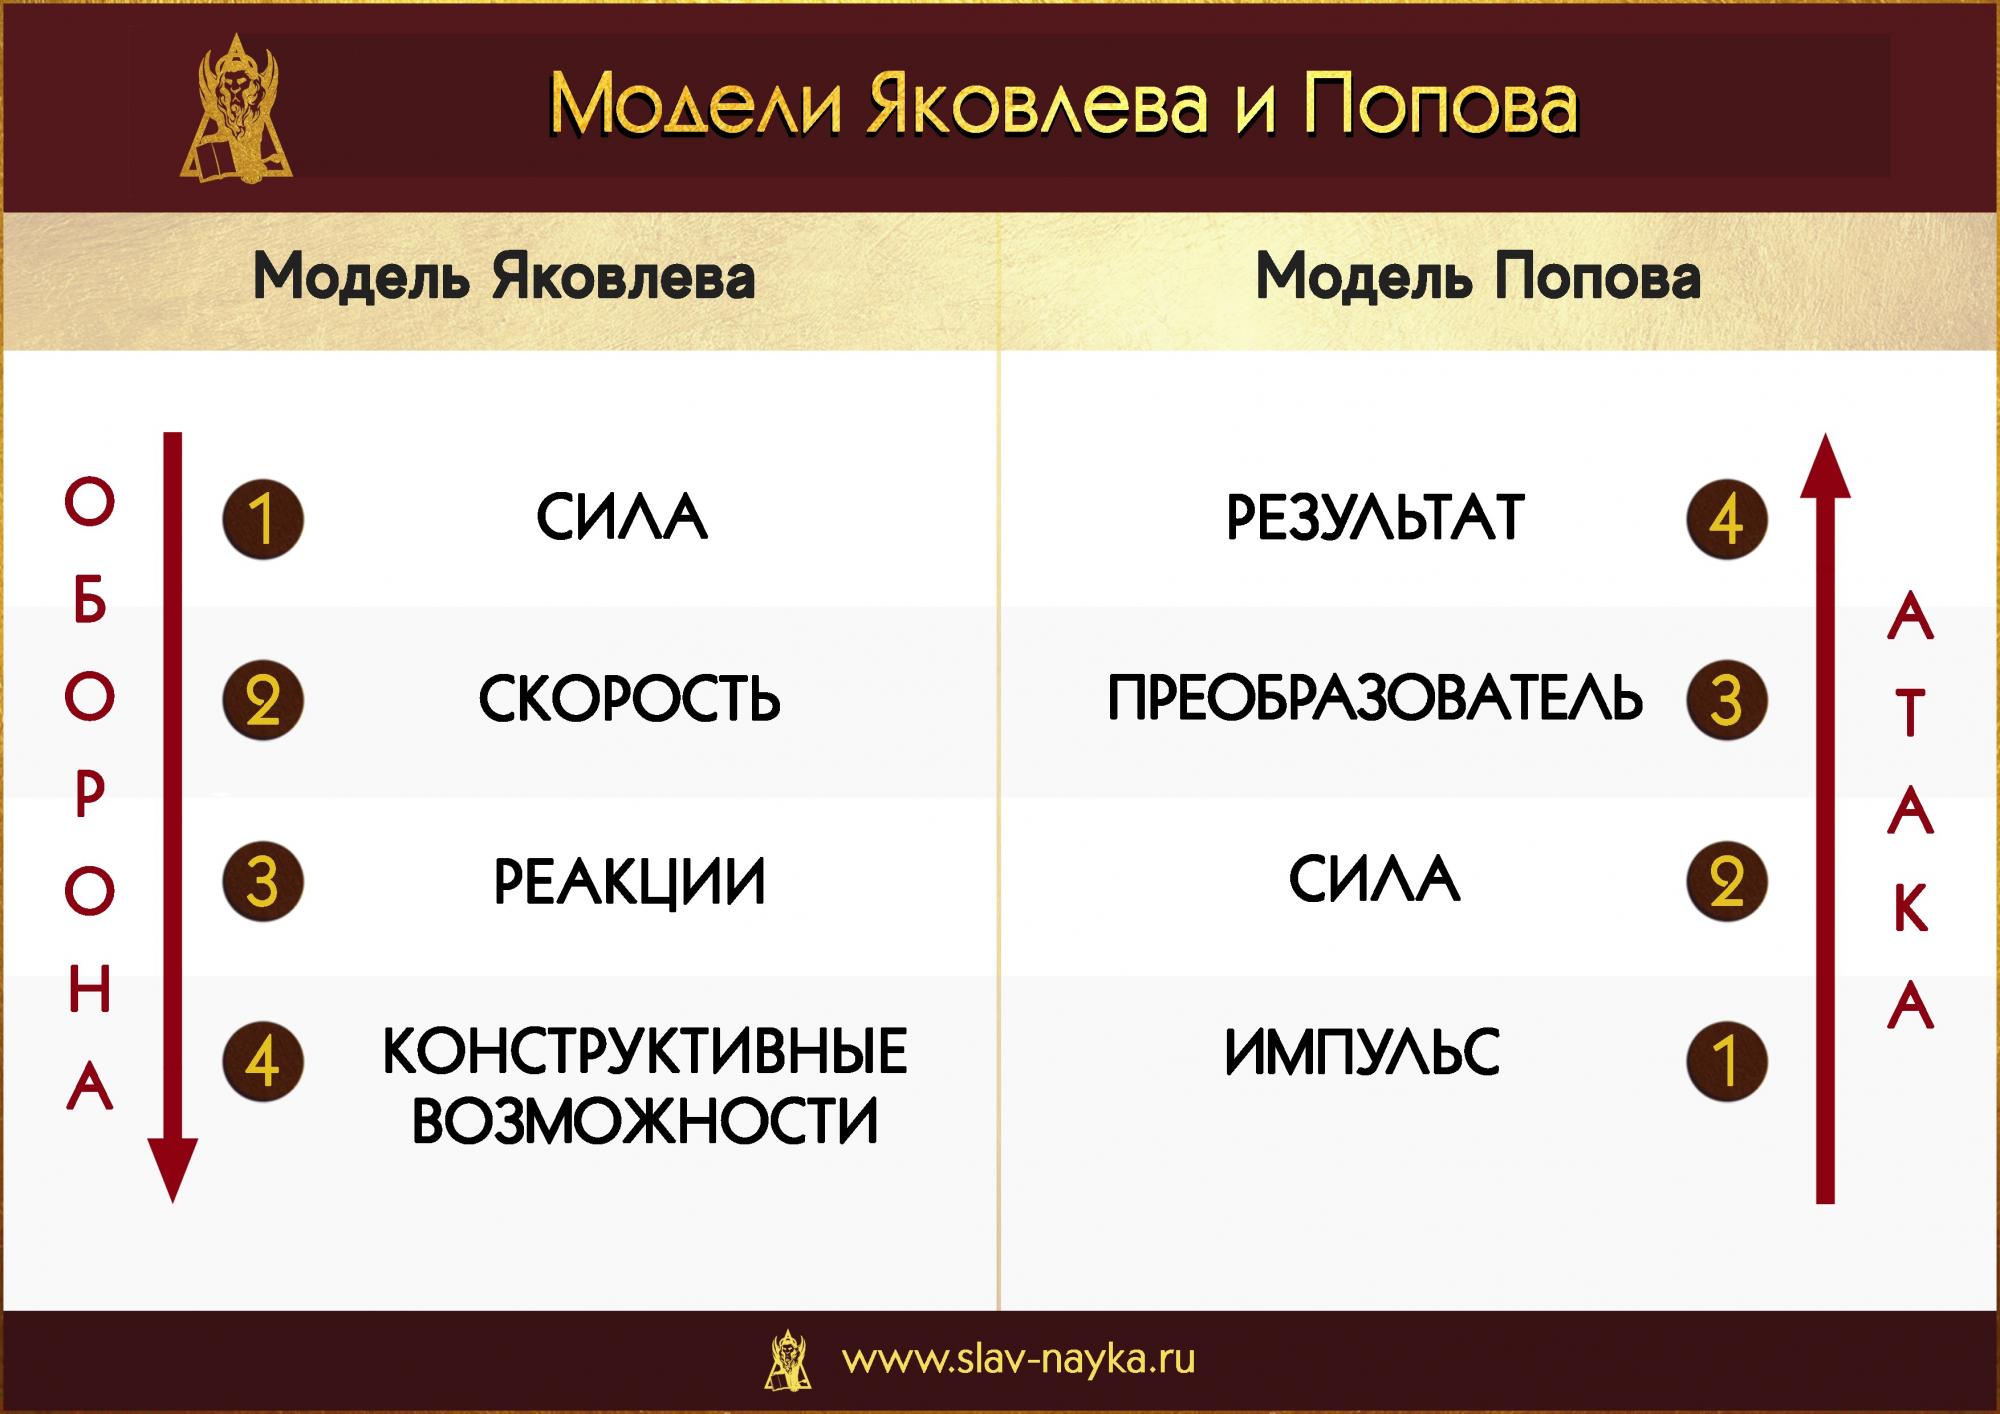 Модели Яковлева и Попова. Реализация пружины навыков